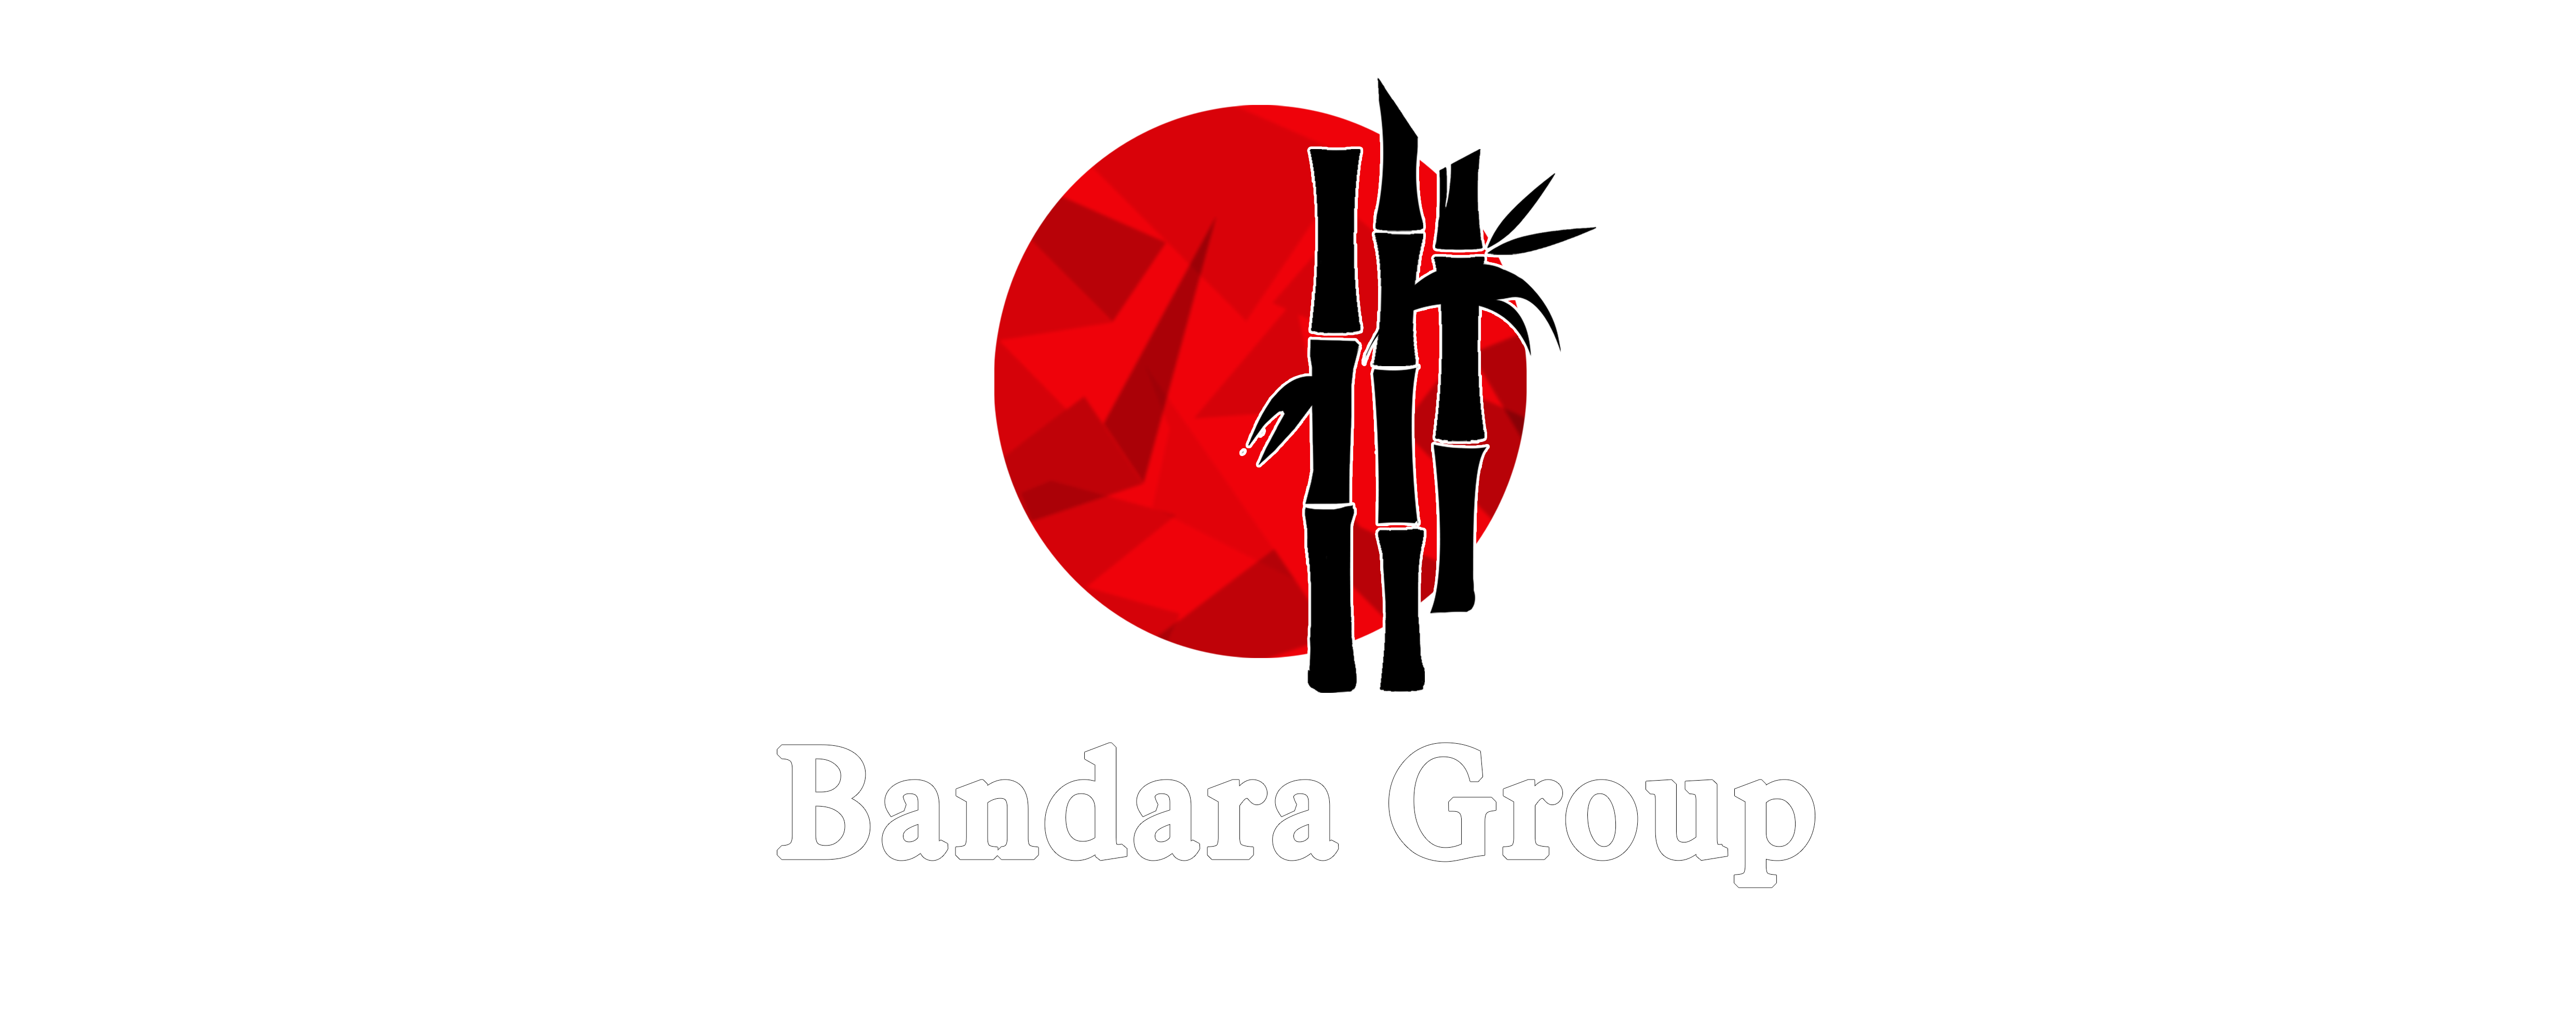 Bandara Group Japan